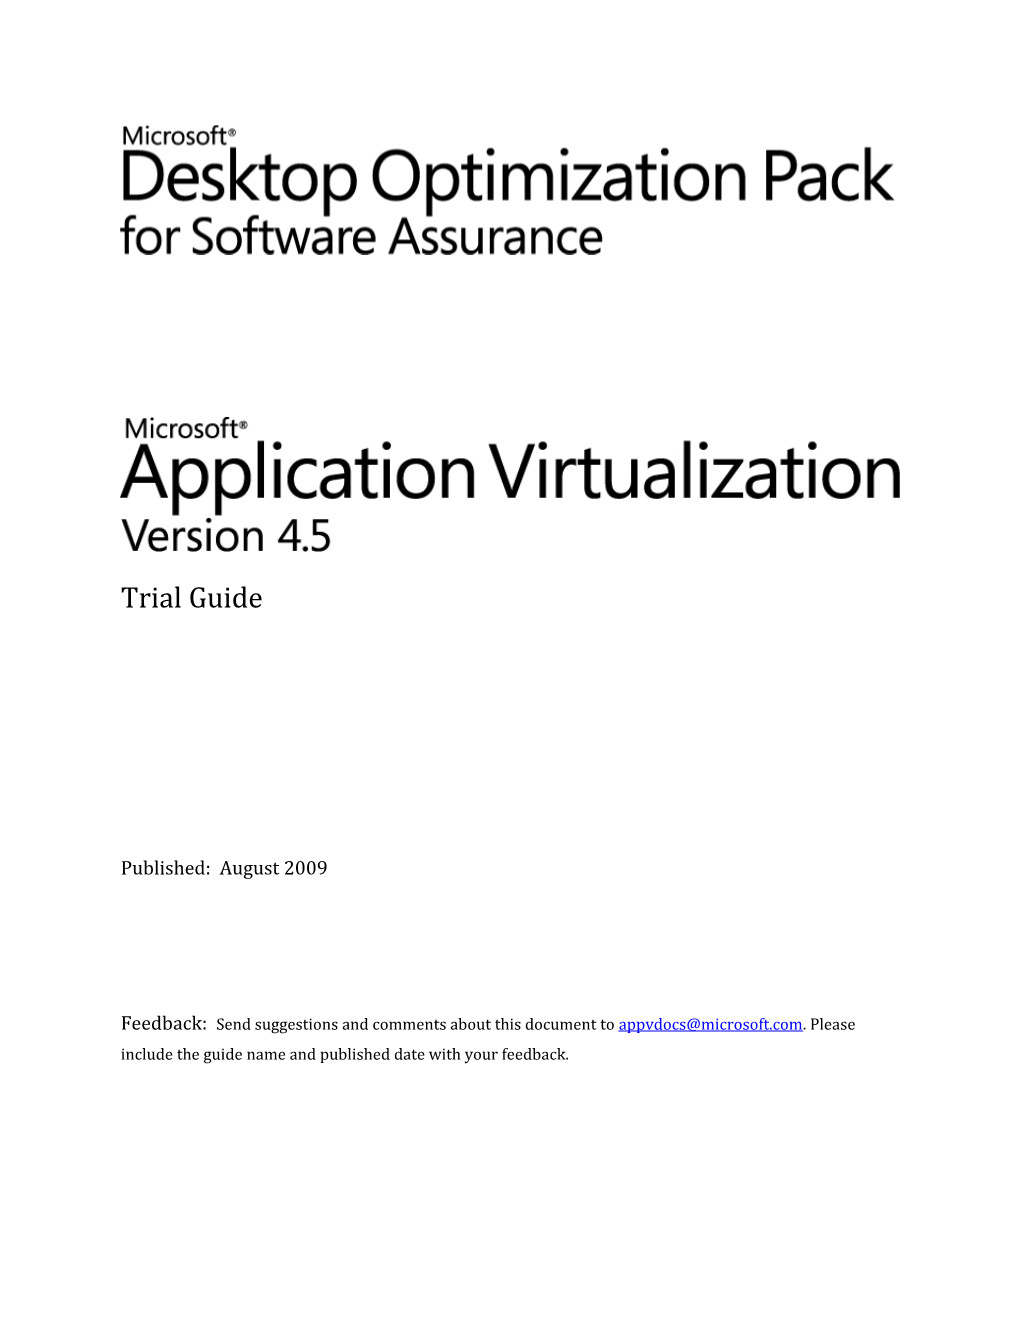 Microsoft Application Virtualization Version 4.5 Trial Guide